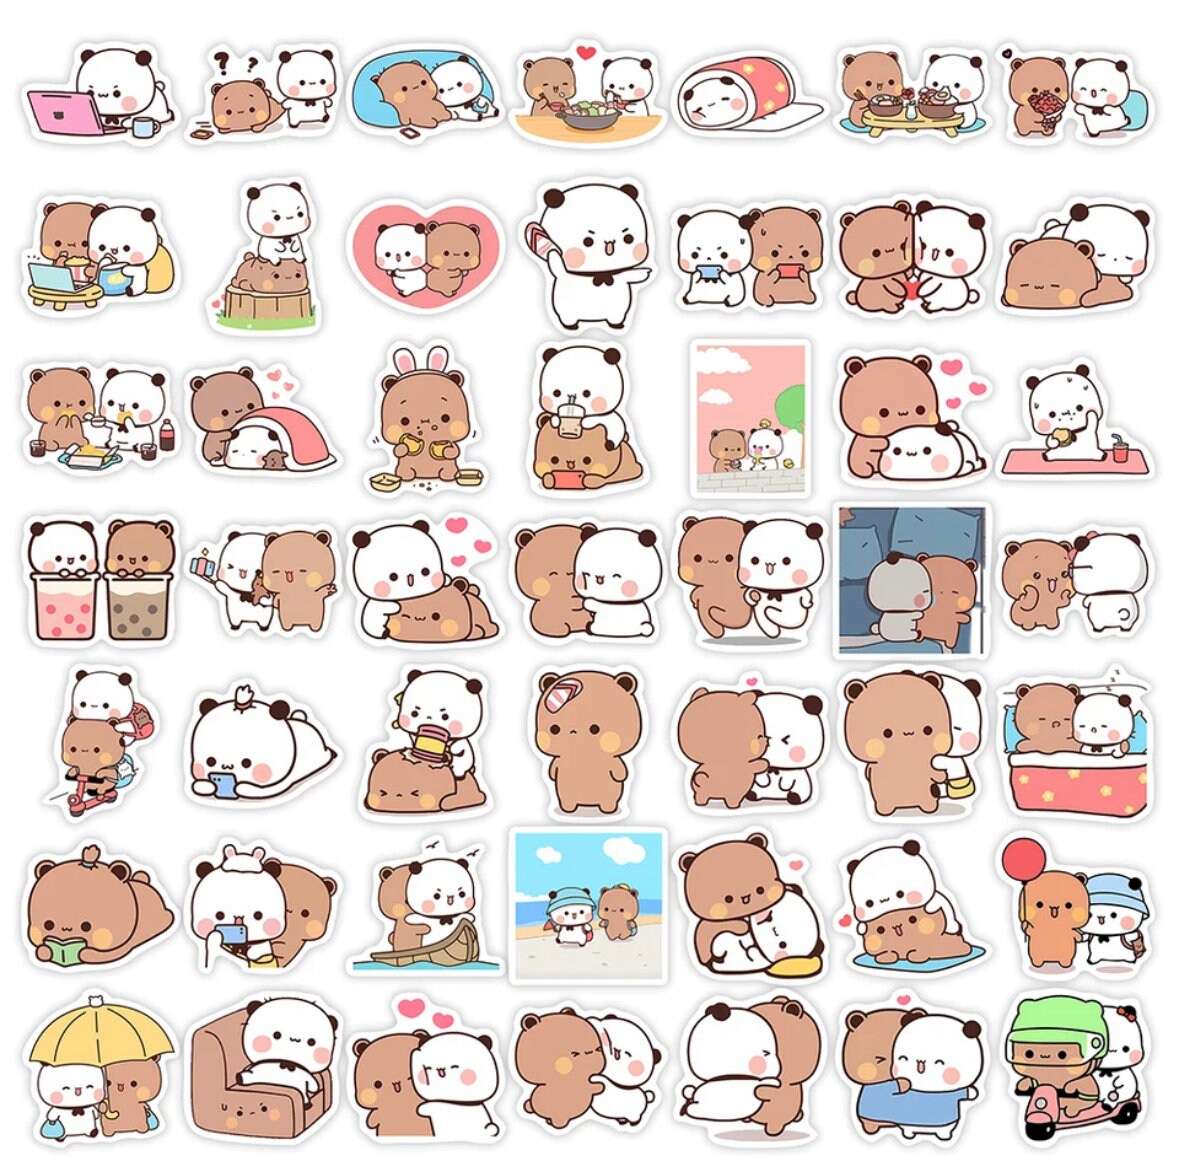 Doobie and Friends Sticker — Doobie & Friends